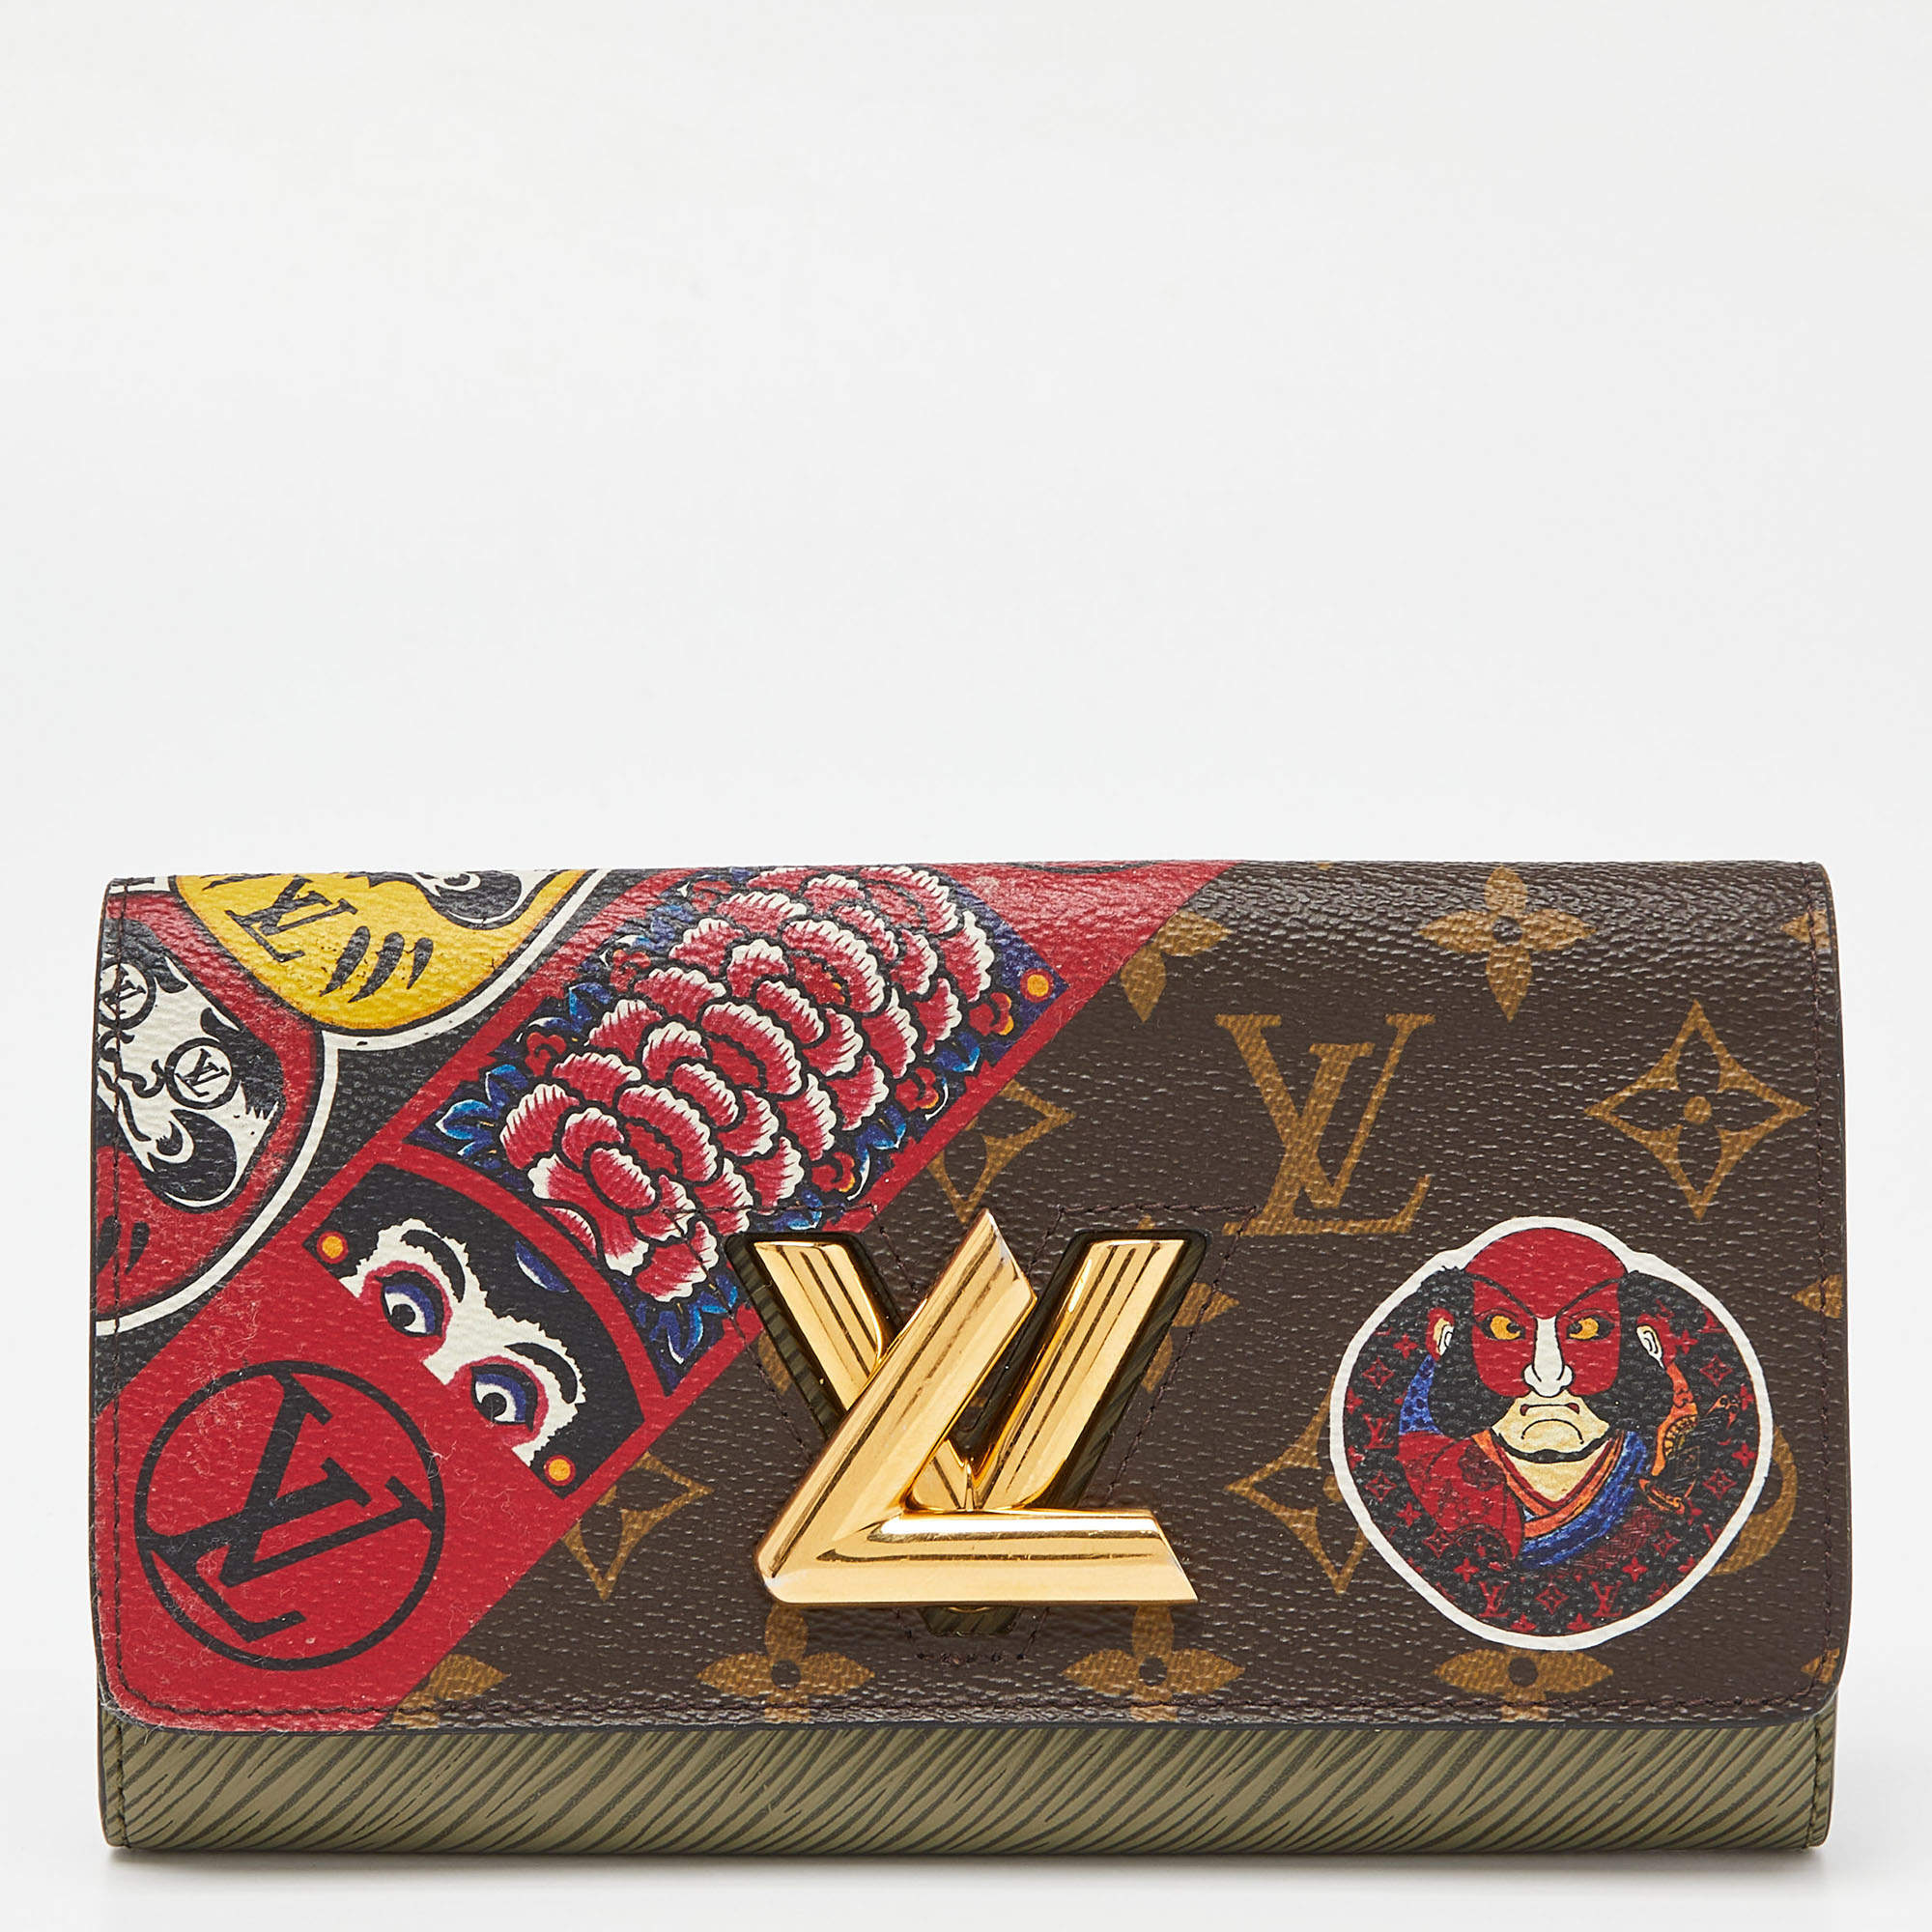 Authentic Louis Vuitton Limited Edition Kabuki Monogram Speedy